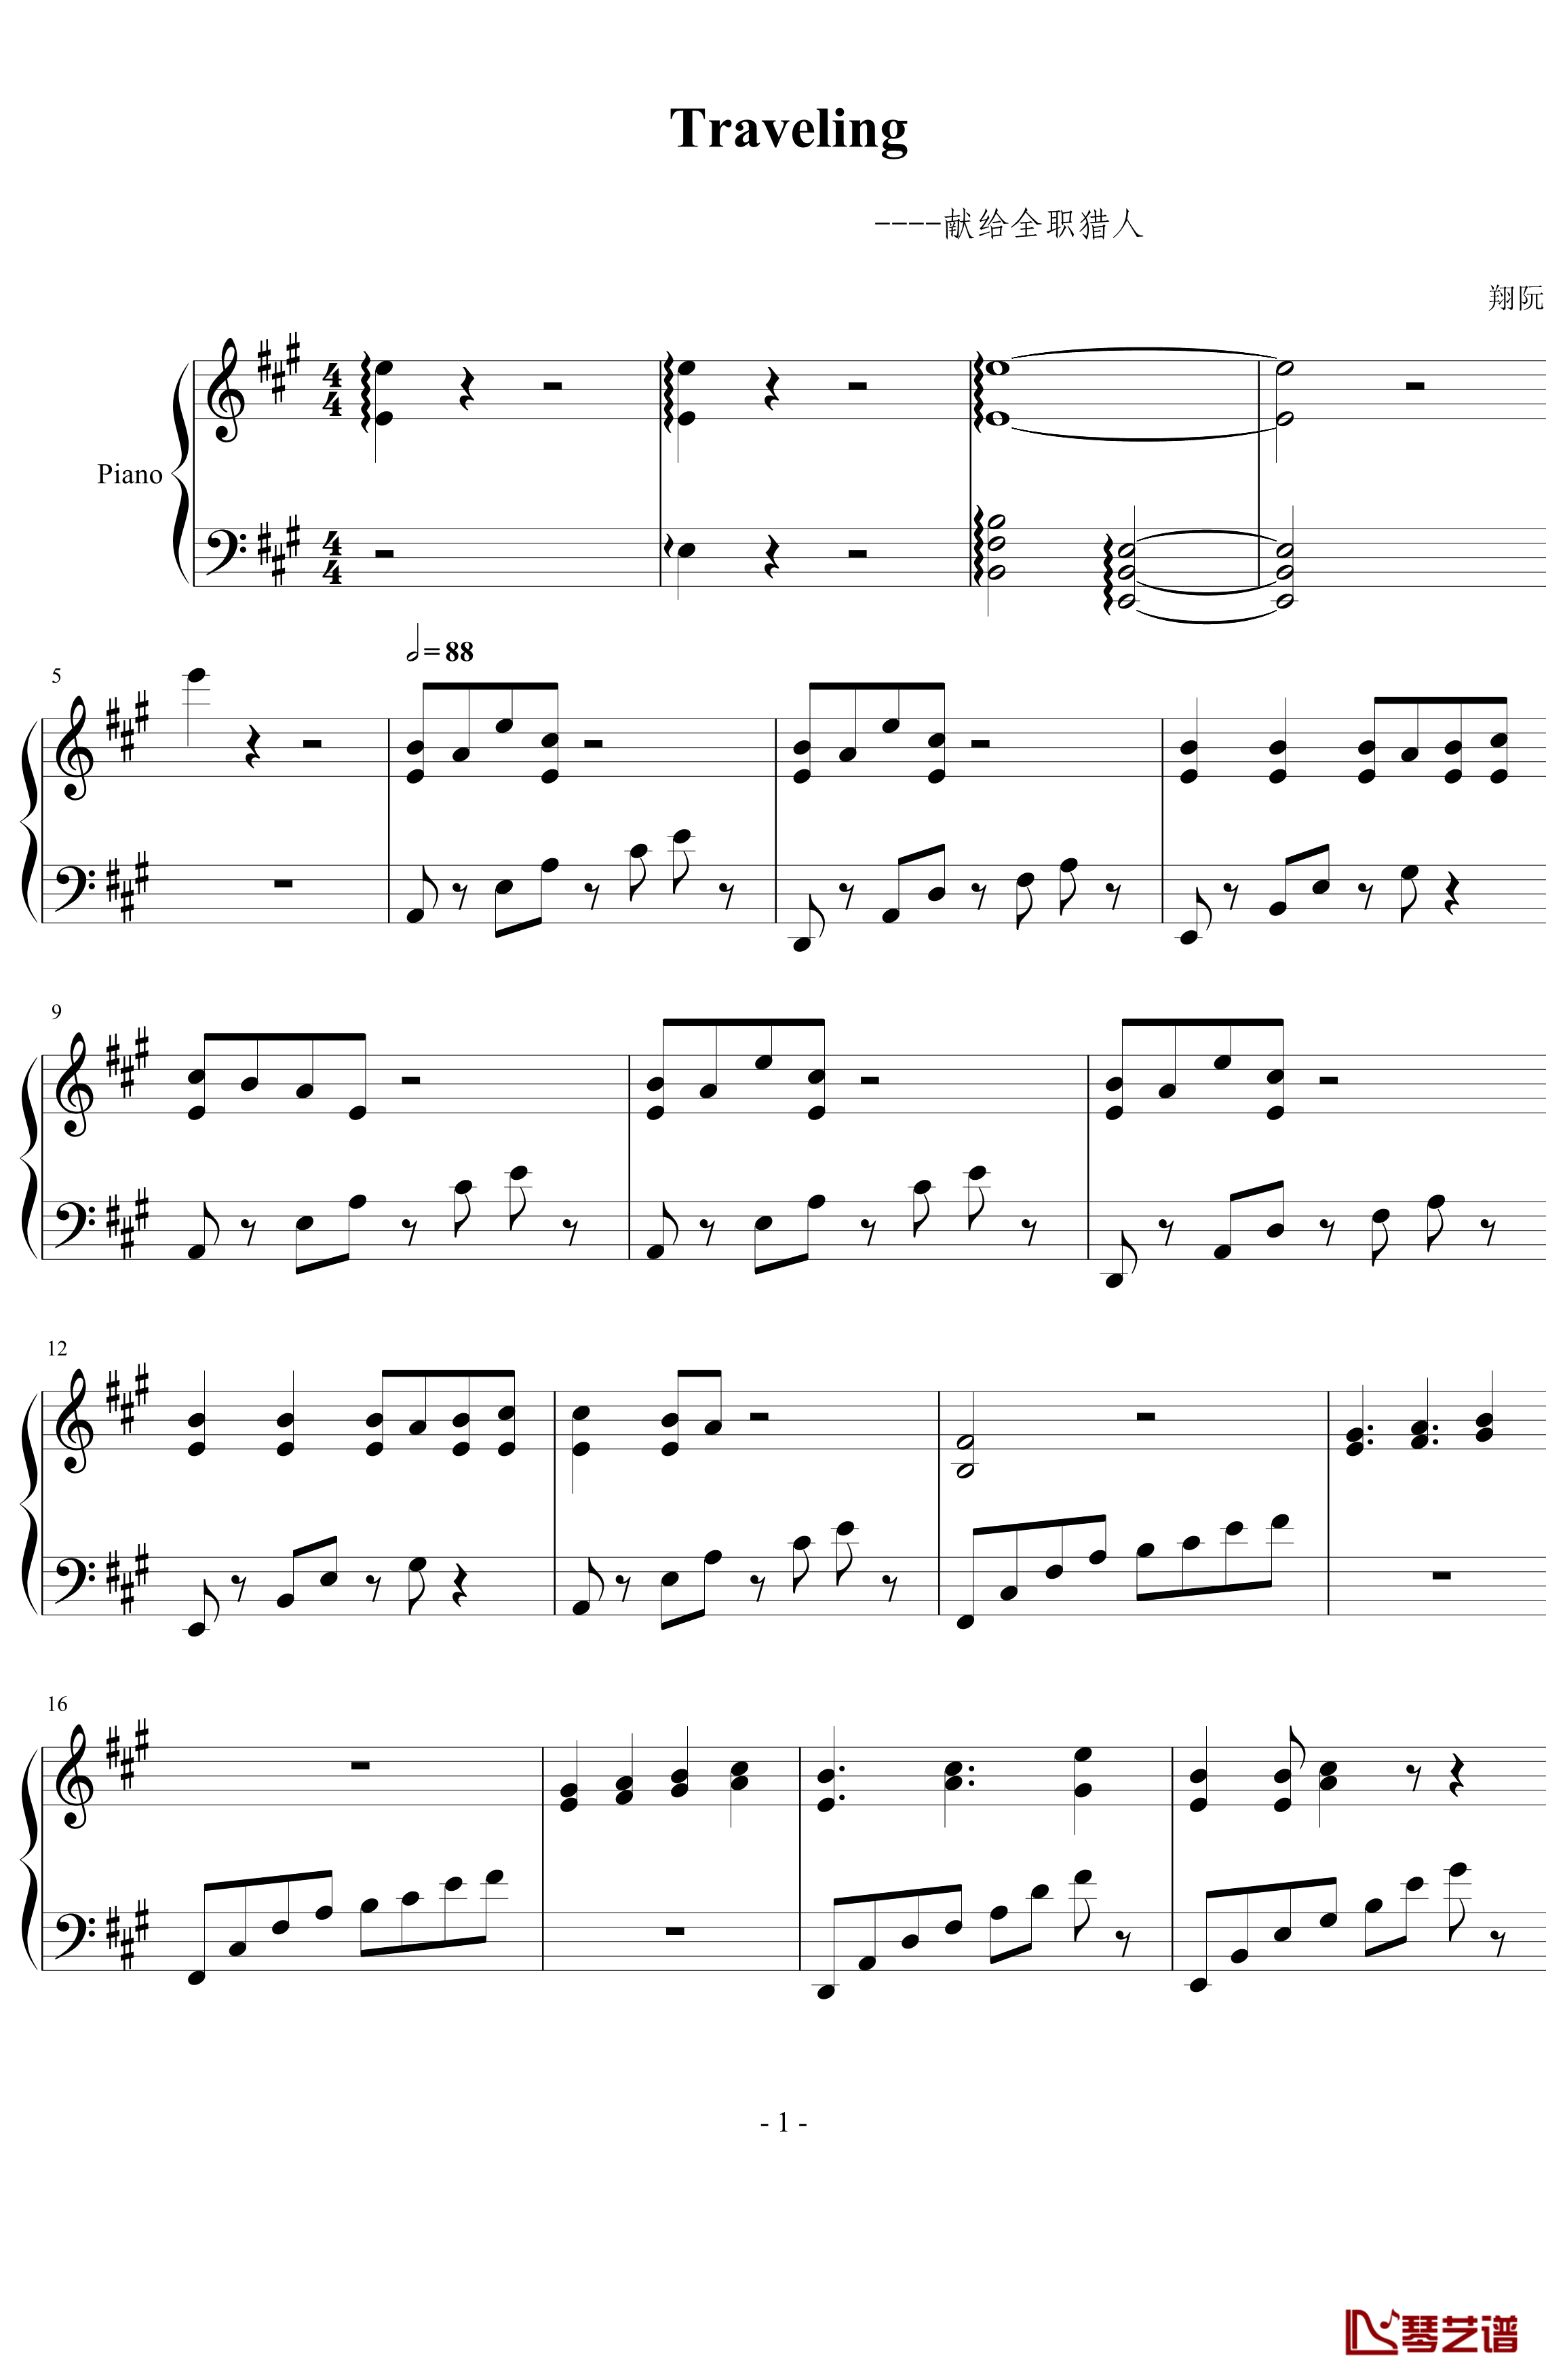 Travling钢琴谱-xiangruan1